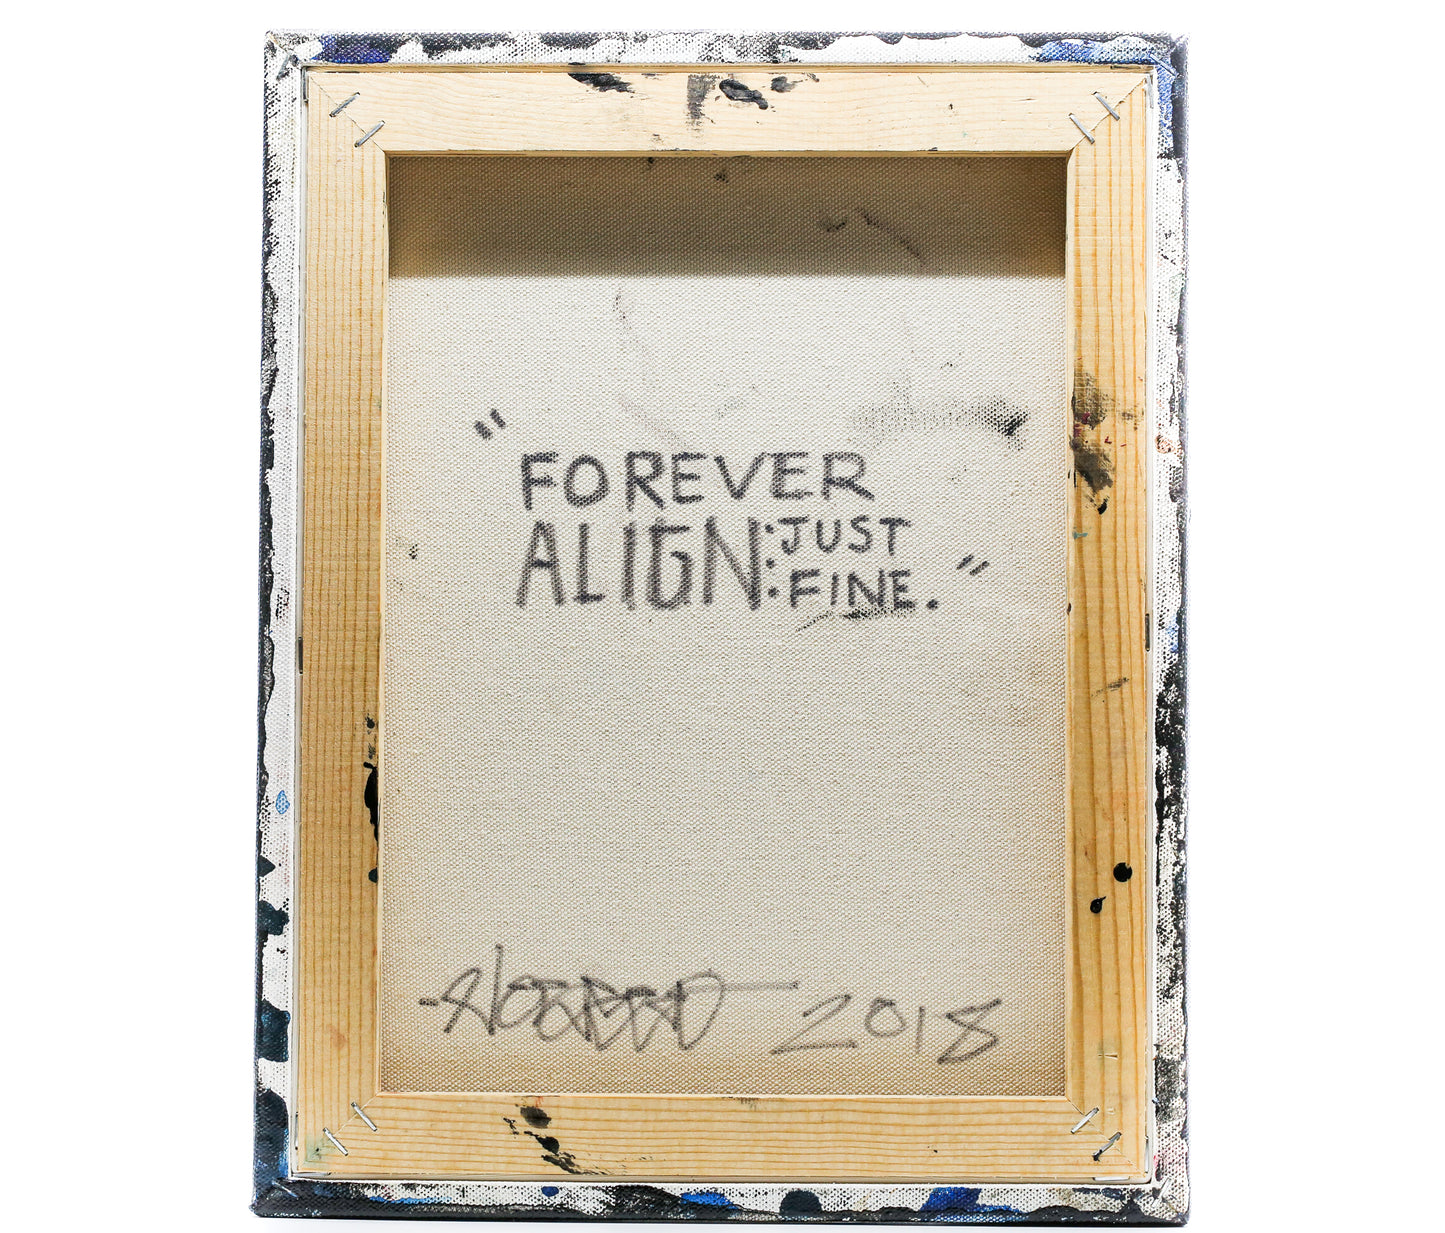 Nosego "Forever Align: Just Fine"